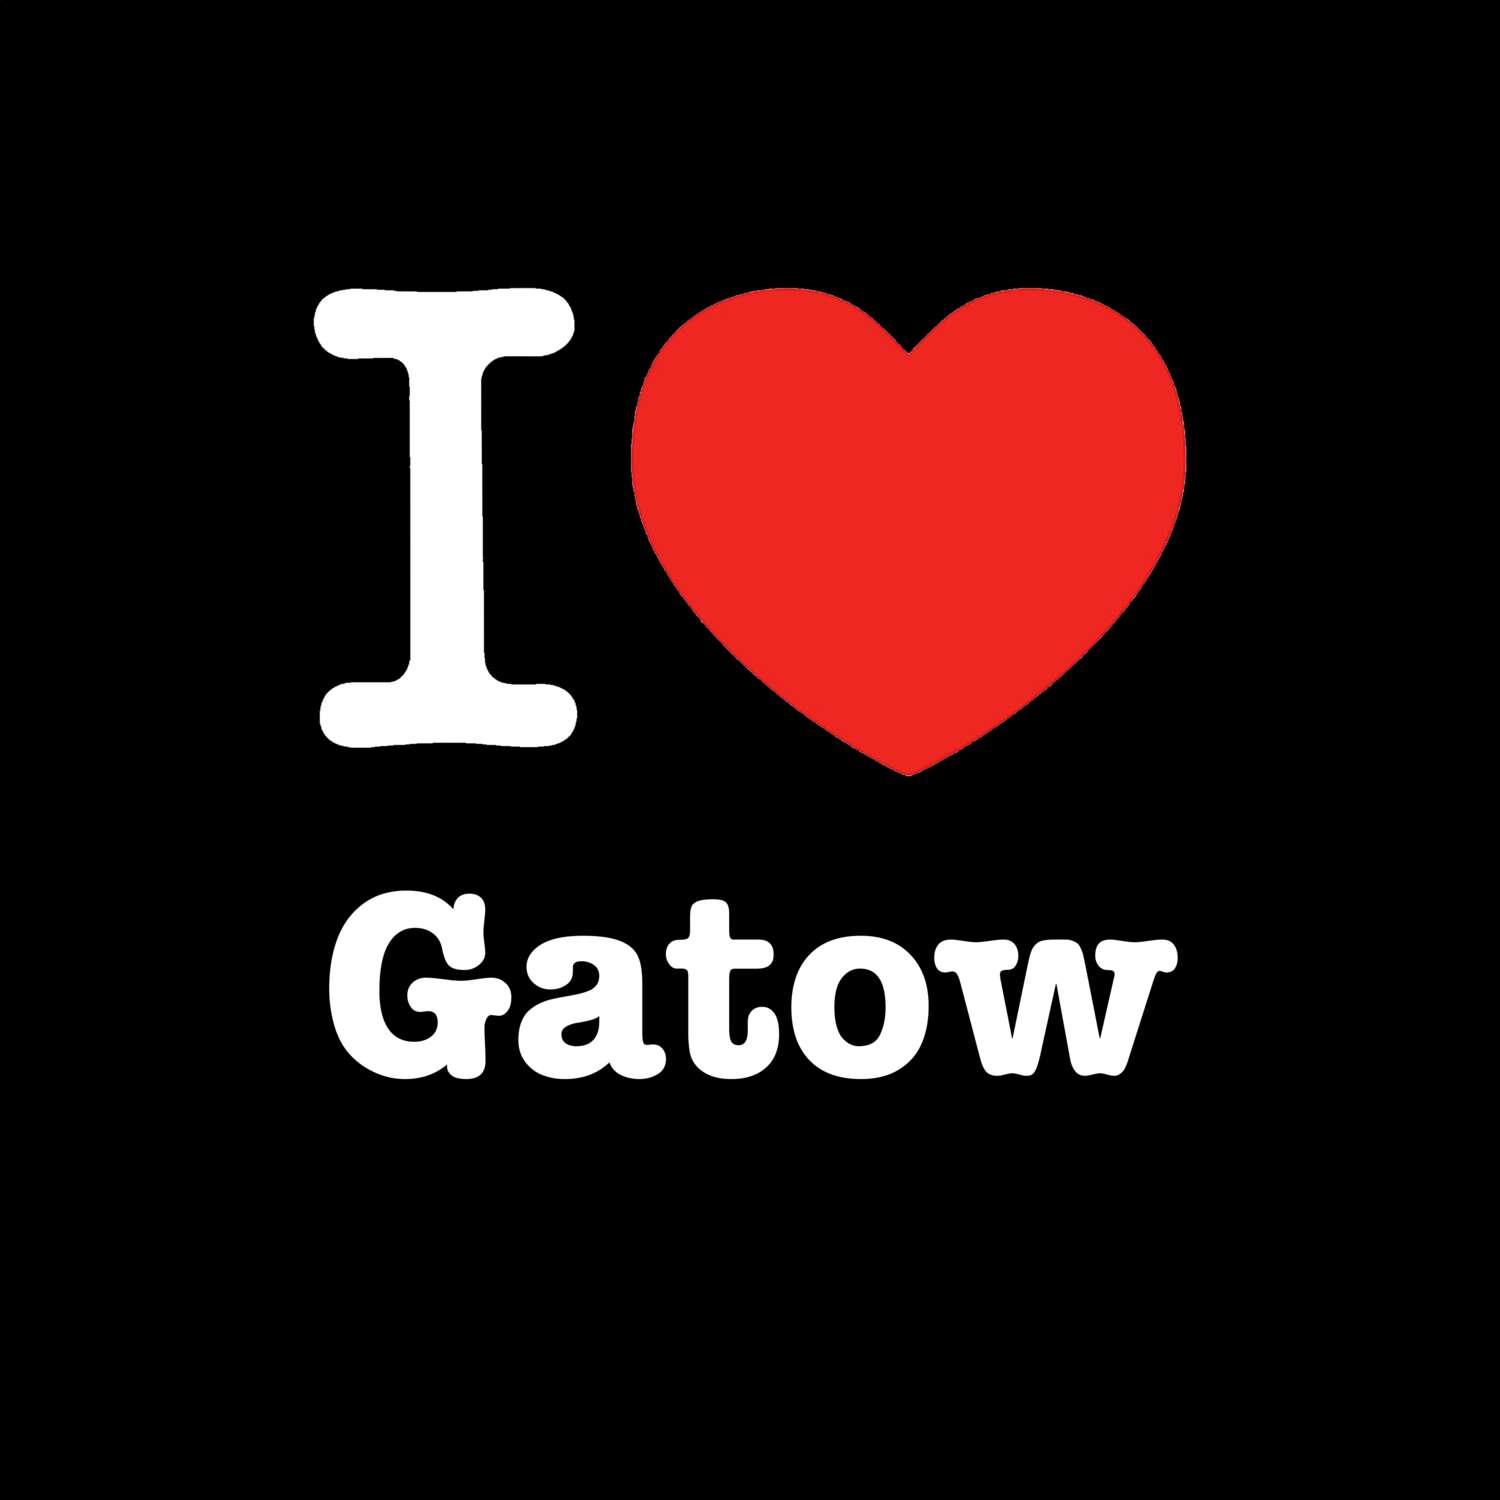 Gatow T-Shirt »I love«